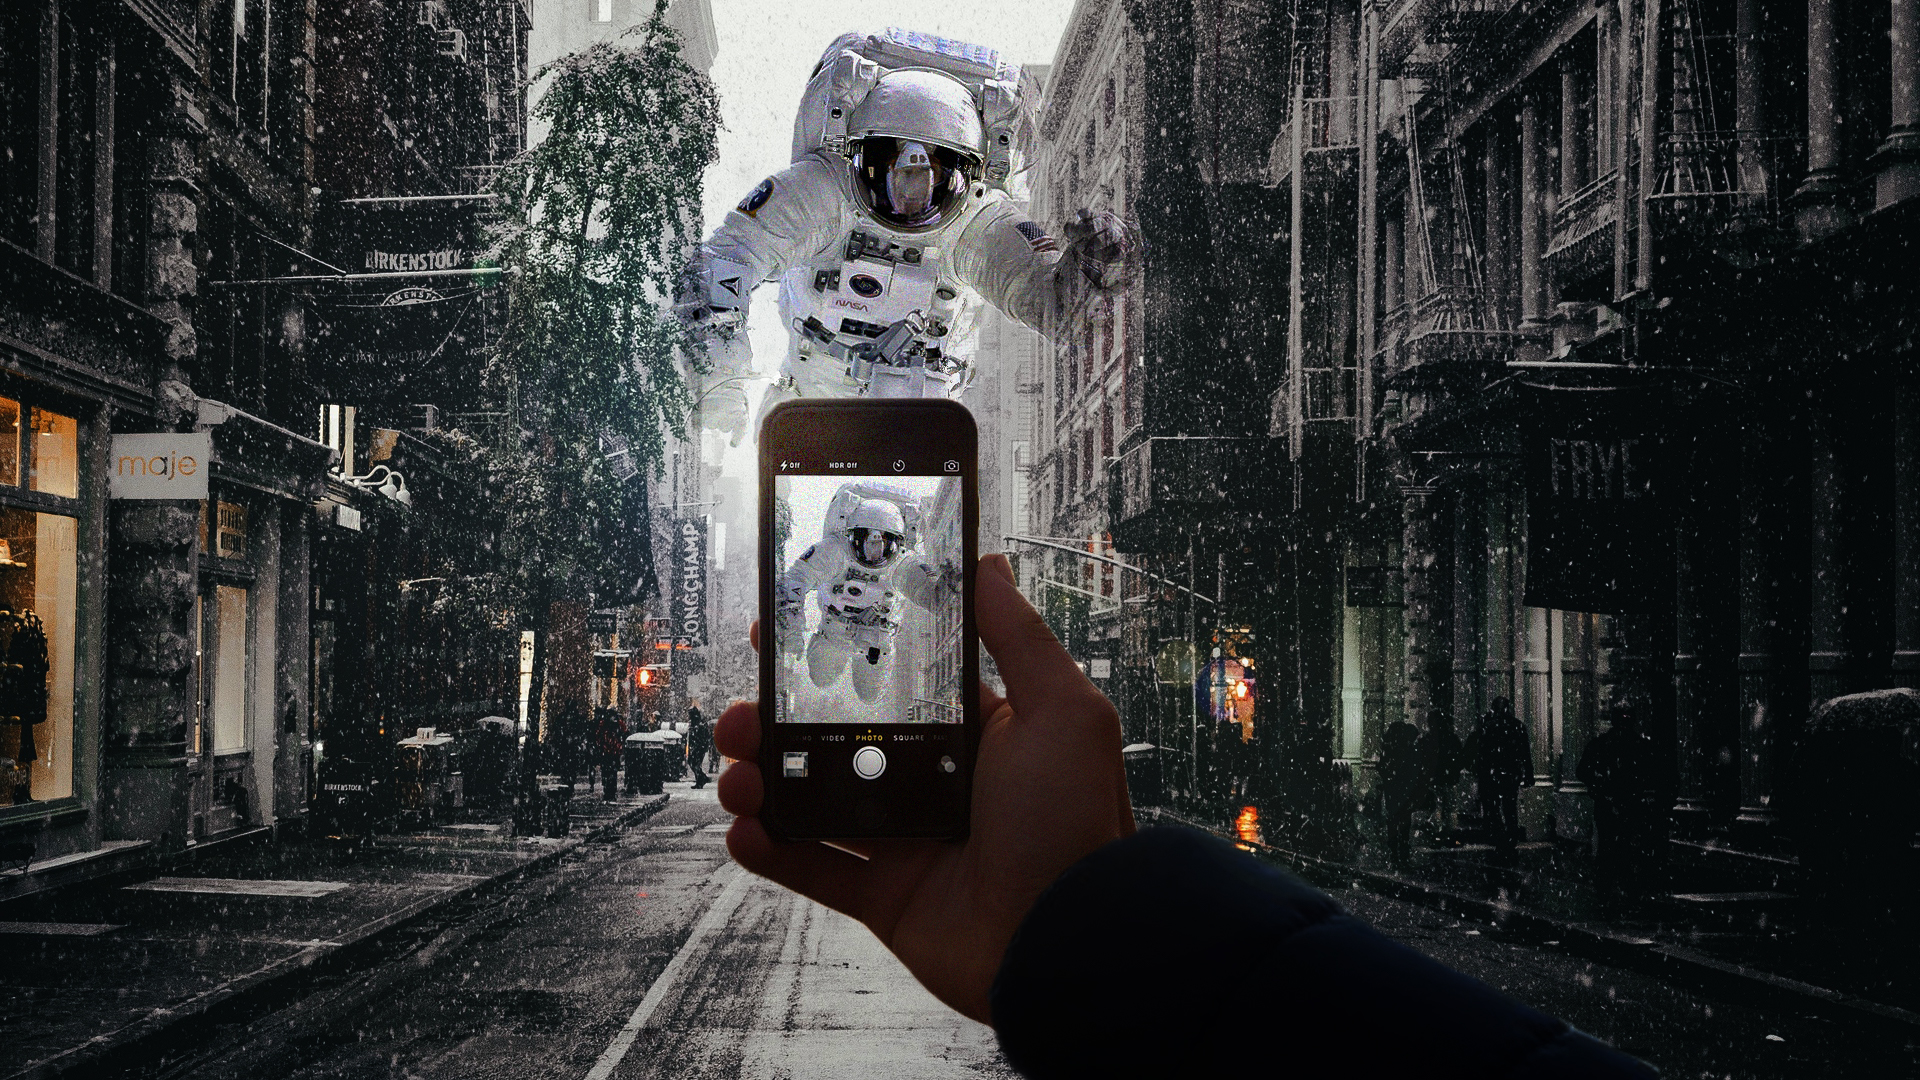 photography, manipulation, astronaut, city, smartphone, winter